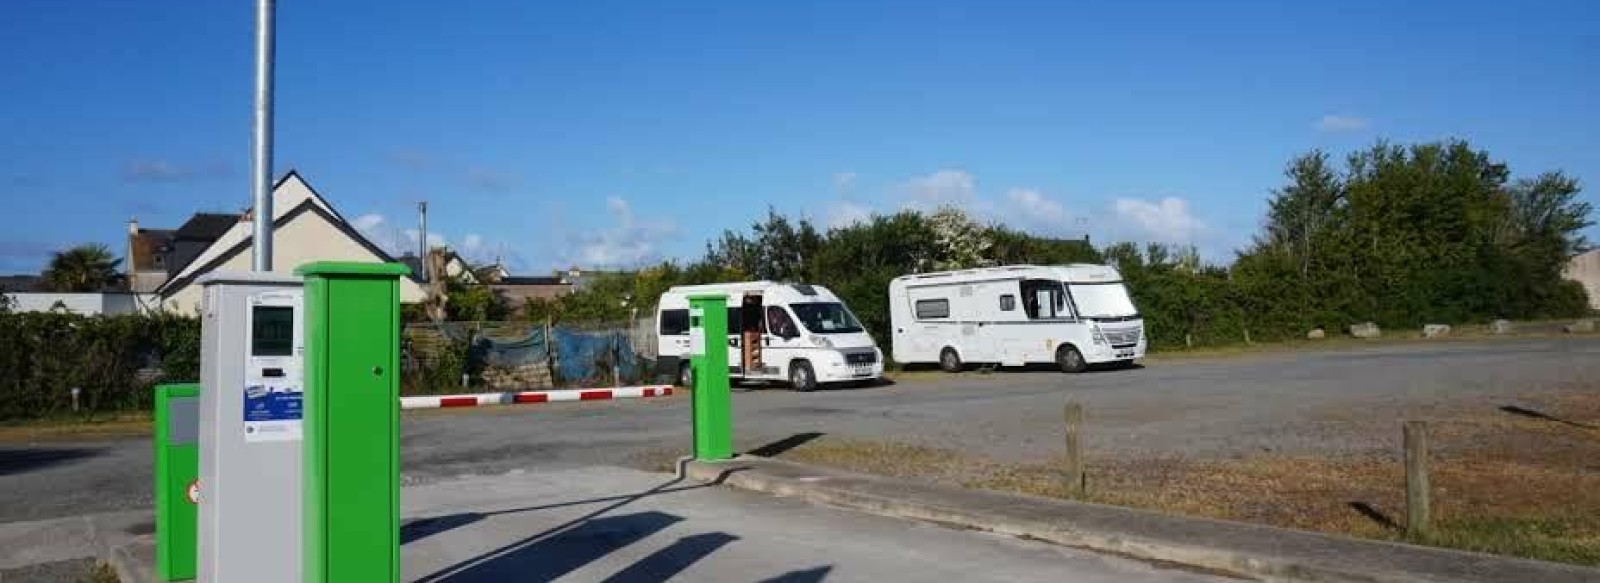 Aire camping cars park Alphonse Daudet